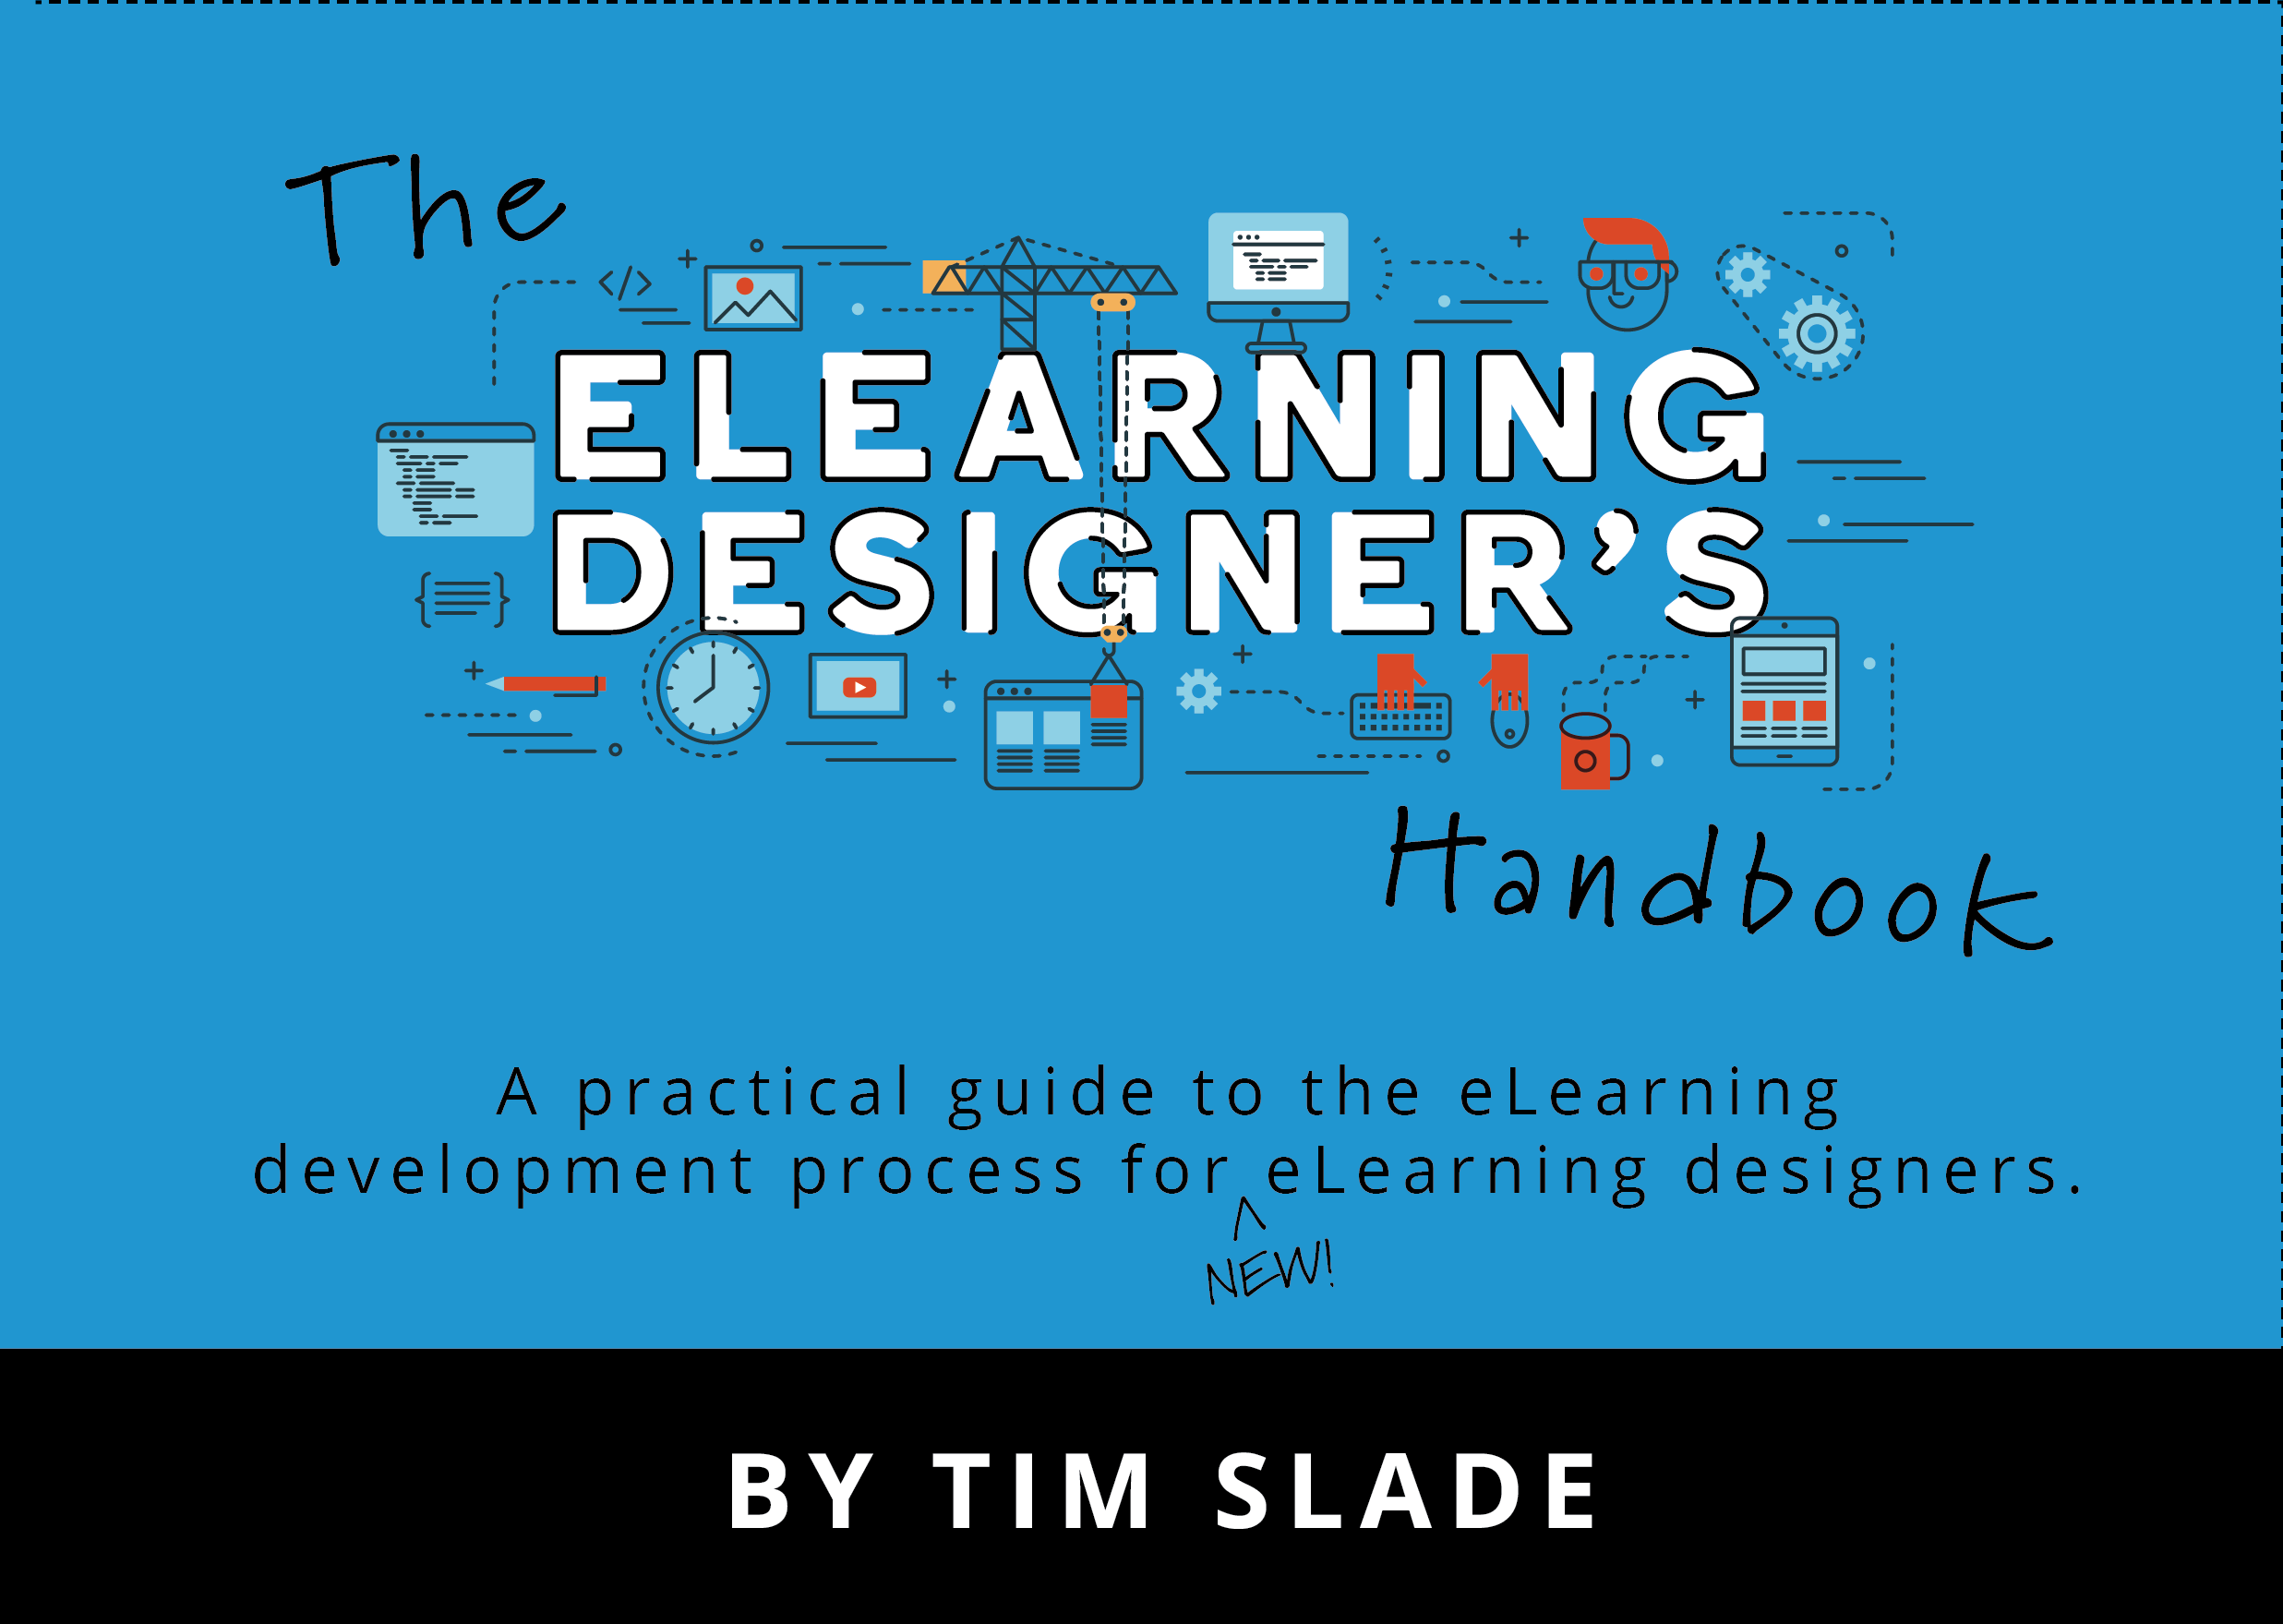 the eLearning designer's handbook by tim slade